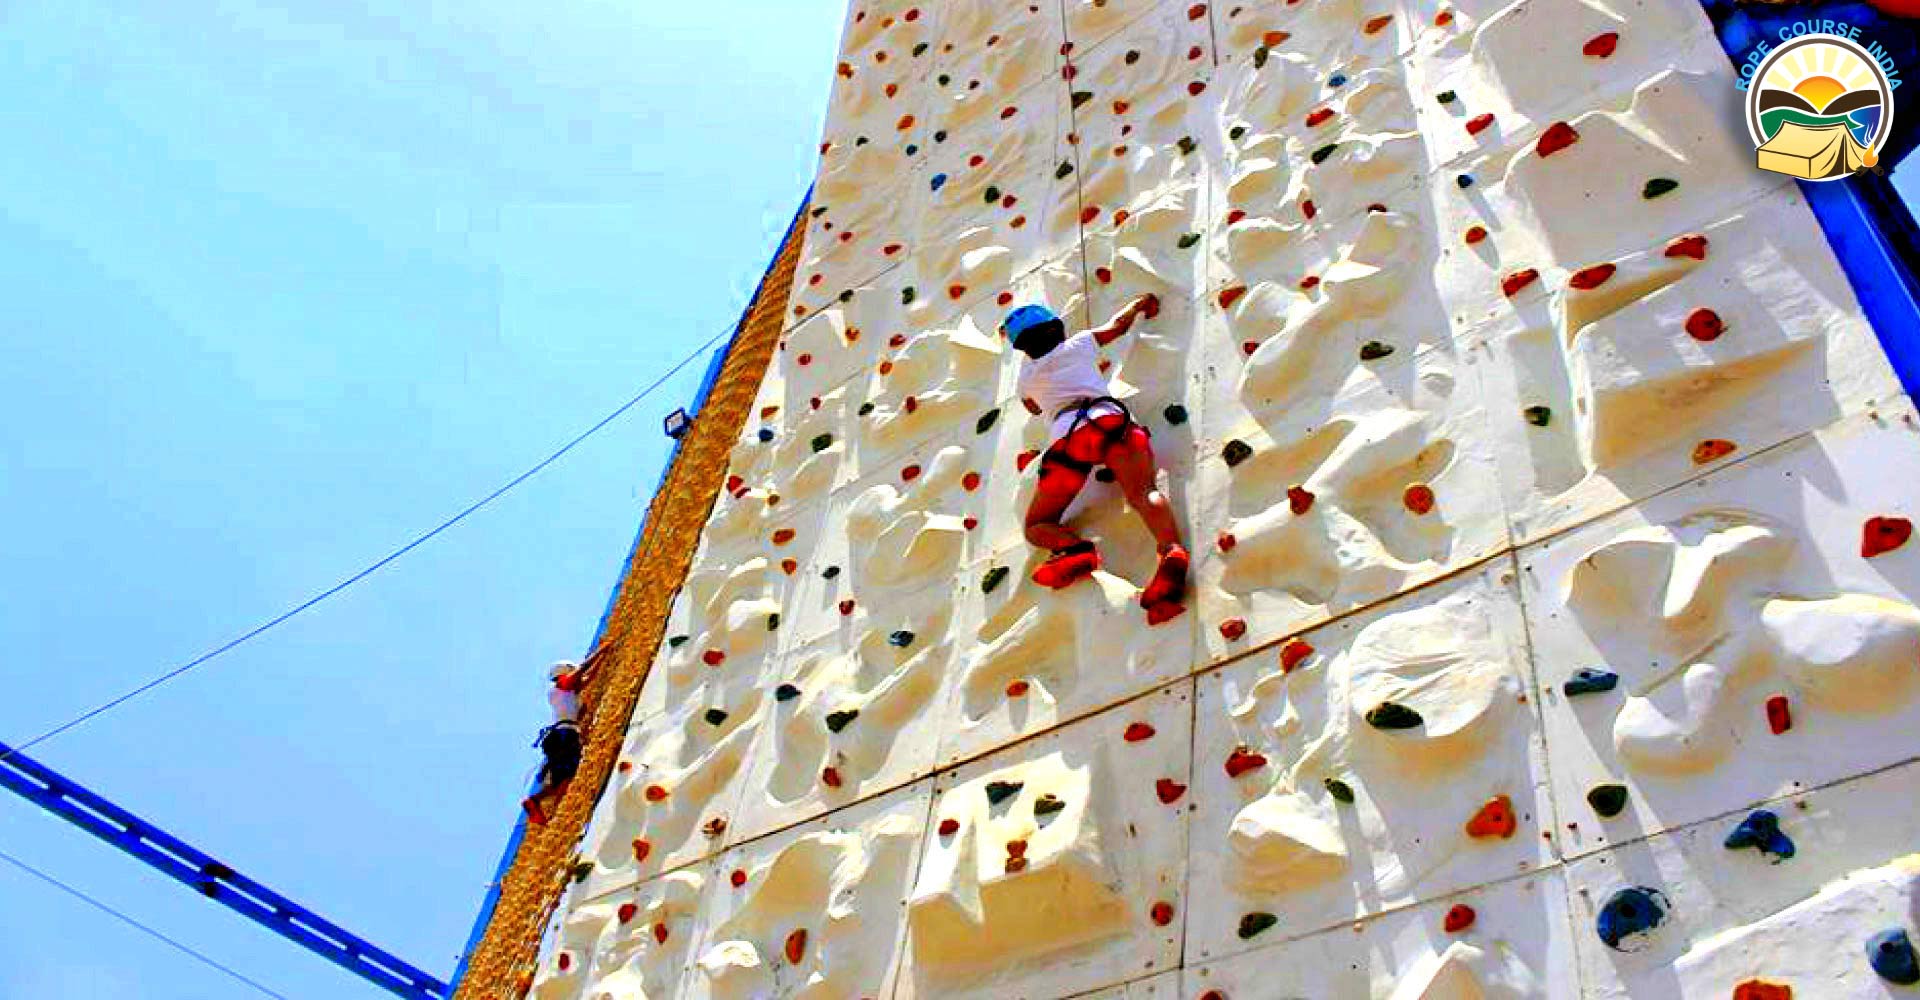 Rock climbing setup in india